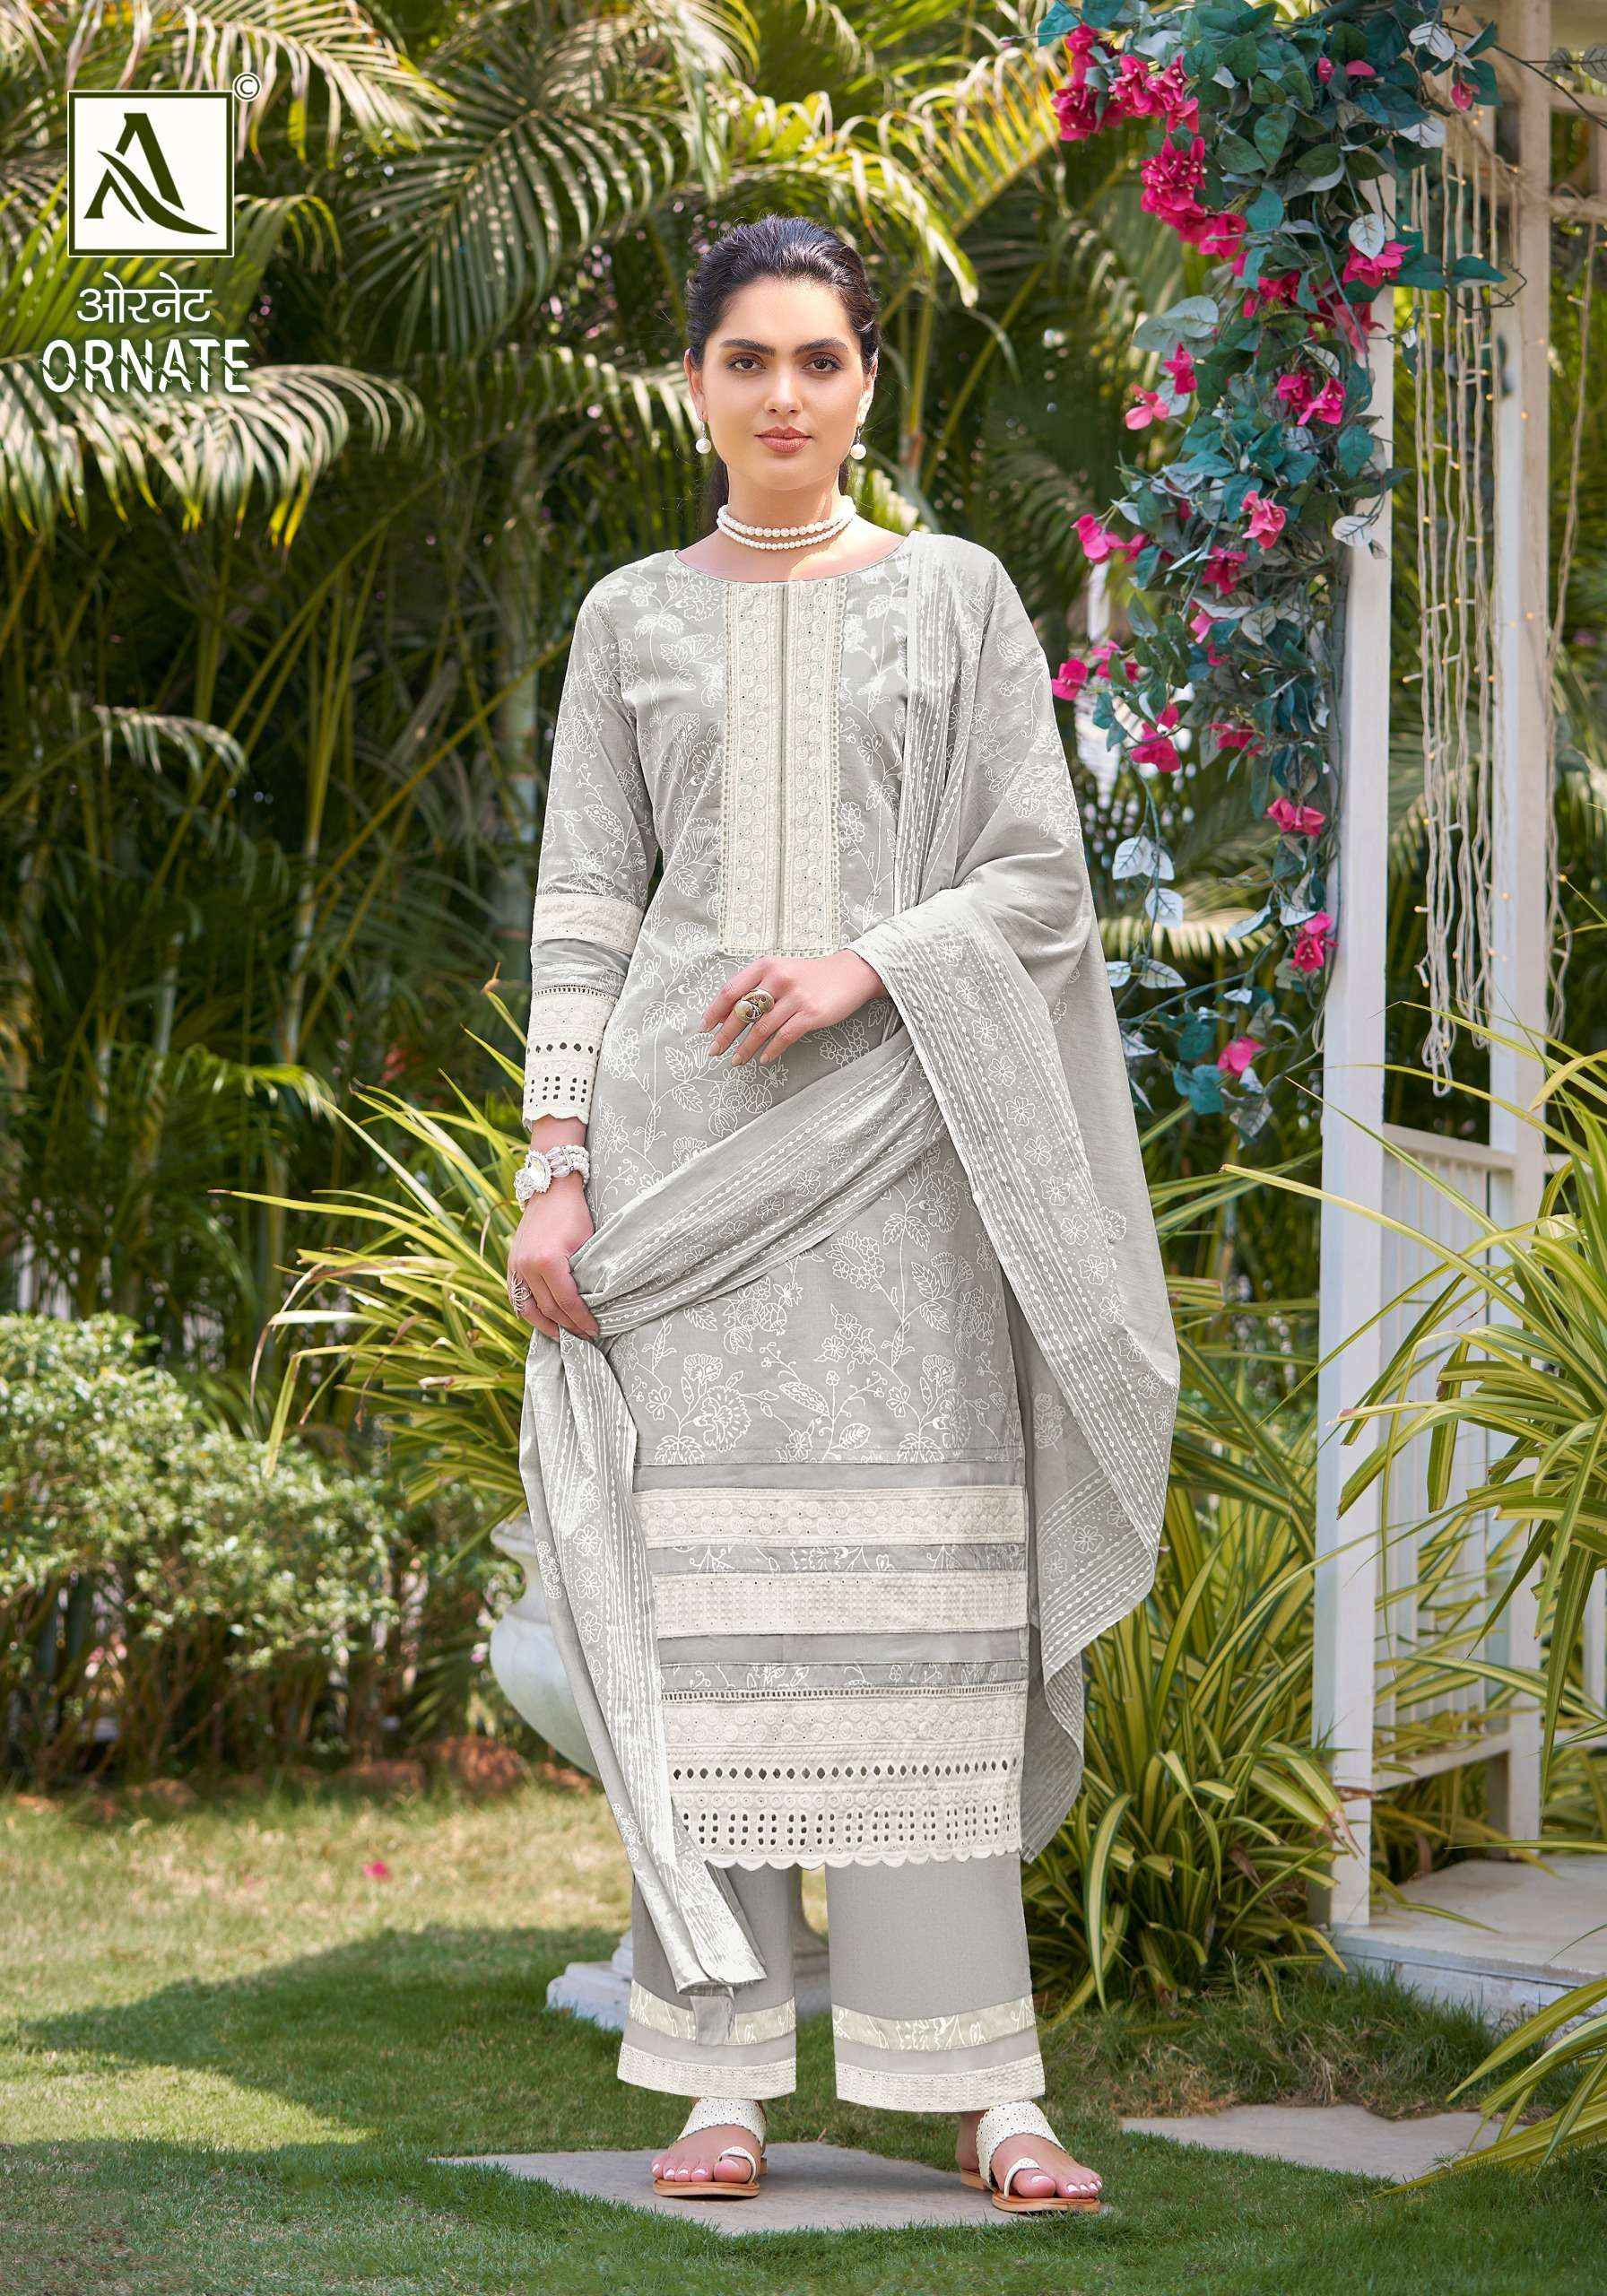 Alok Ornate Cambric Cotton Dress Material 6 pcs Catalogue